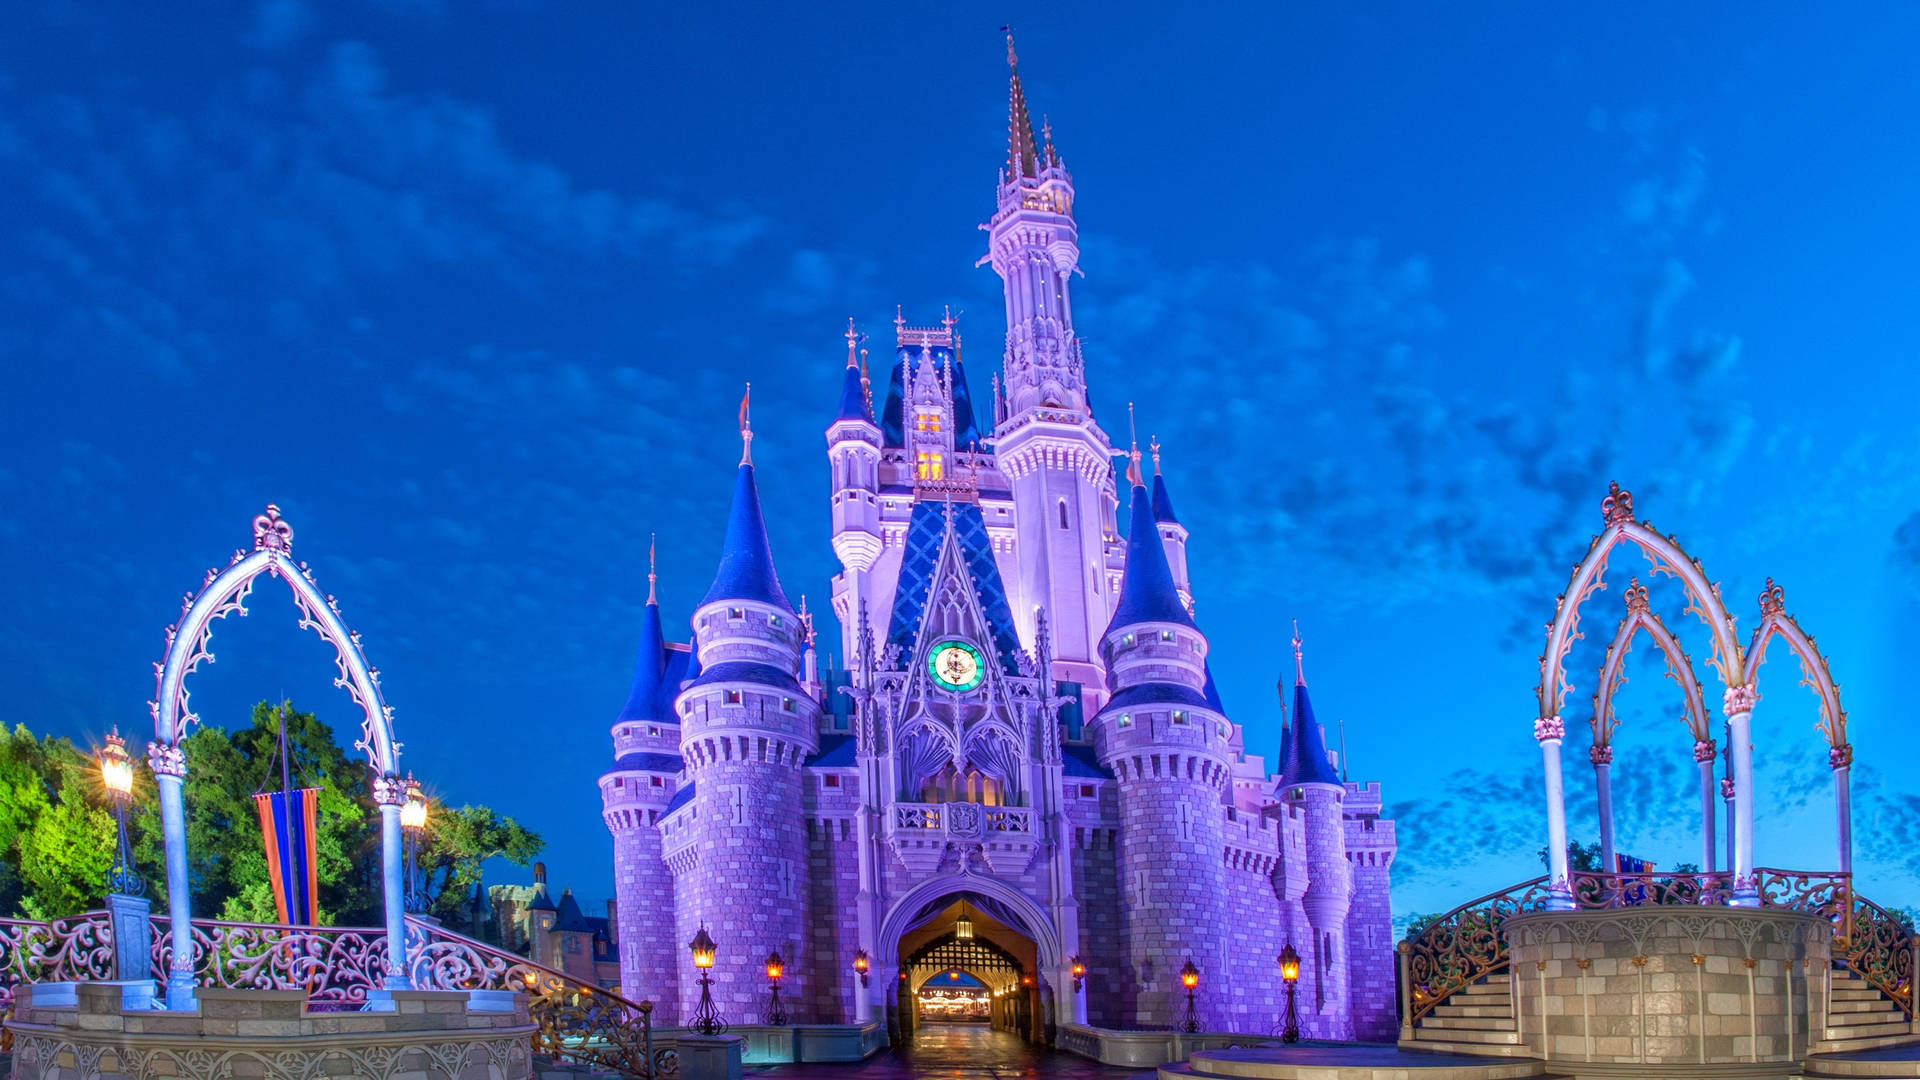 Disney World's Cinderella Castle Wallpaper